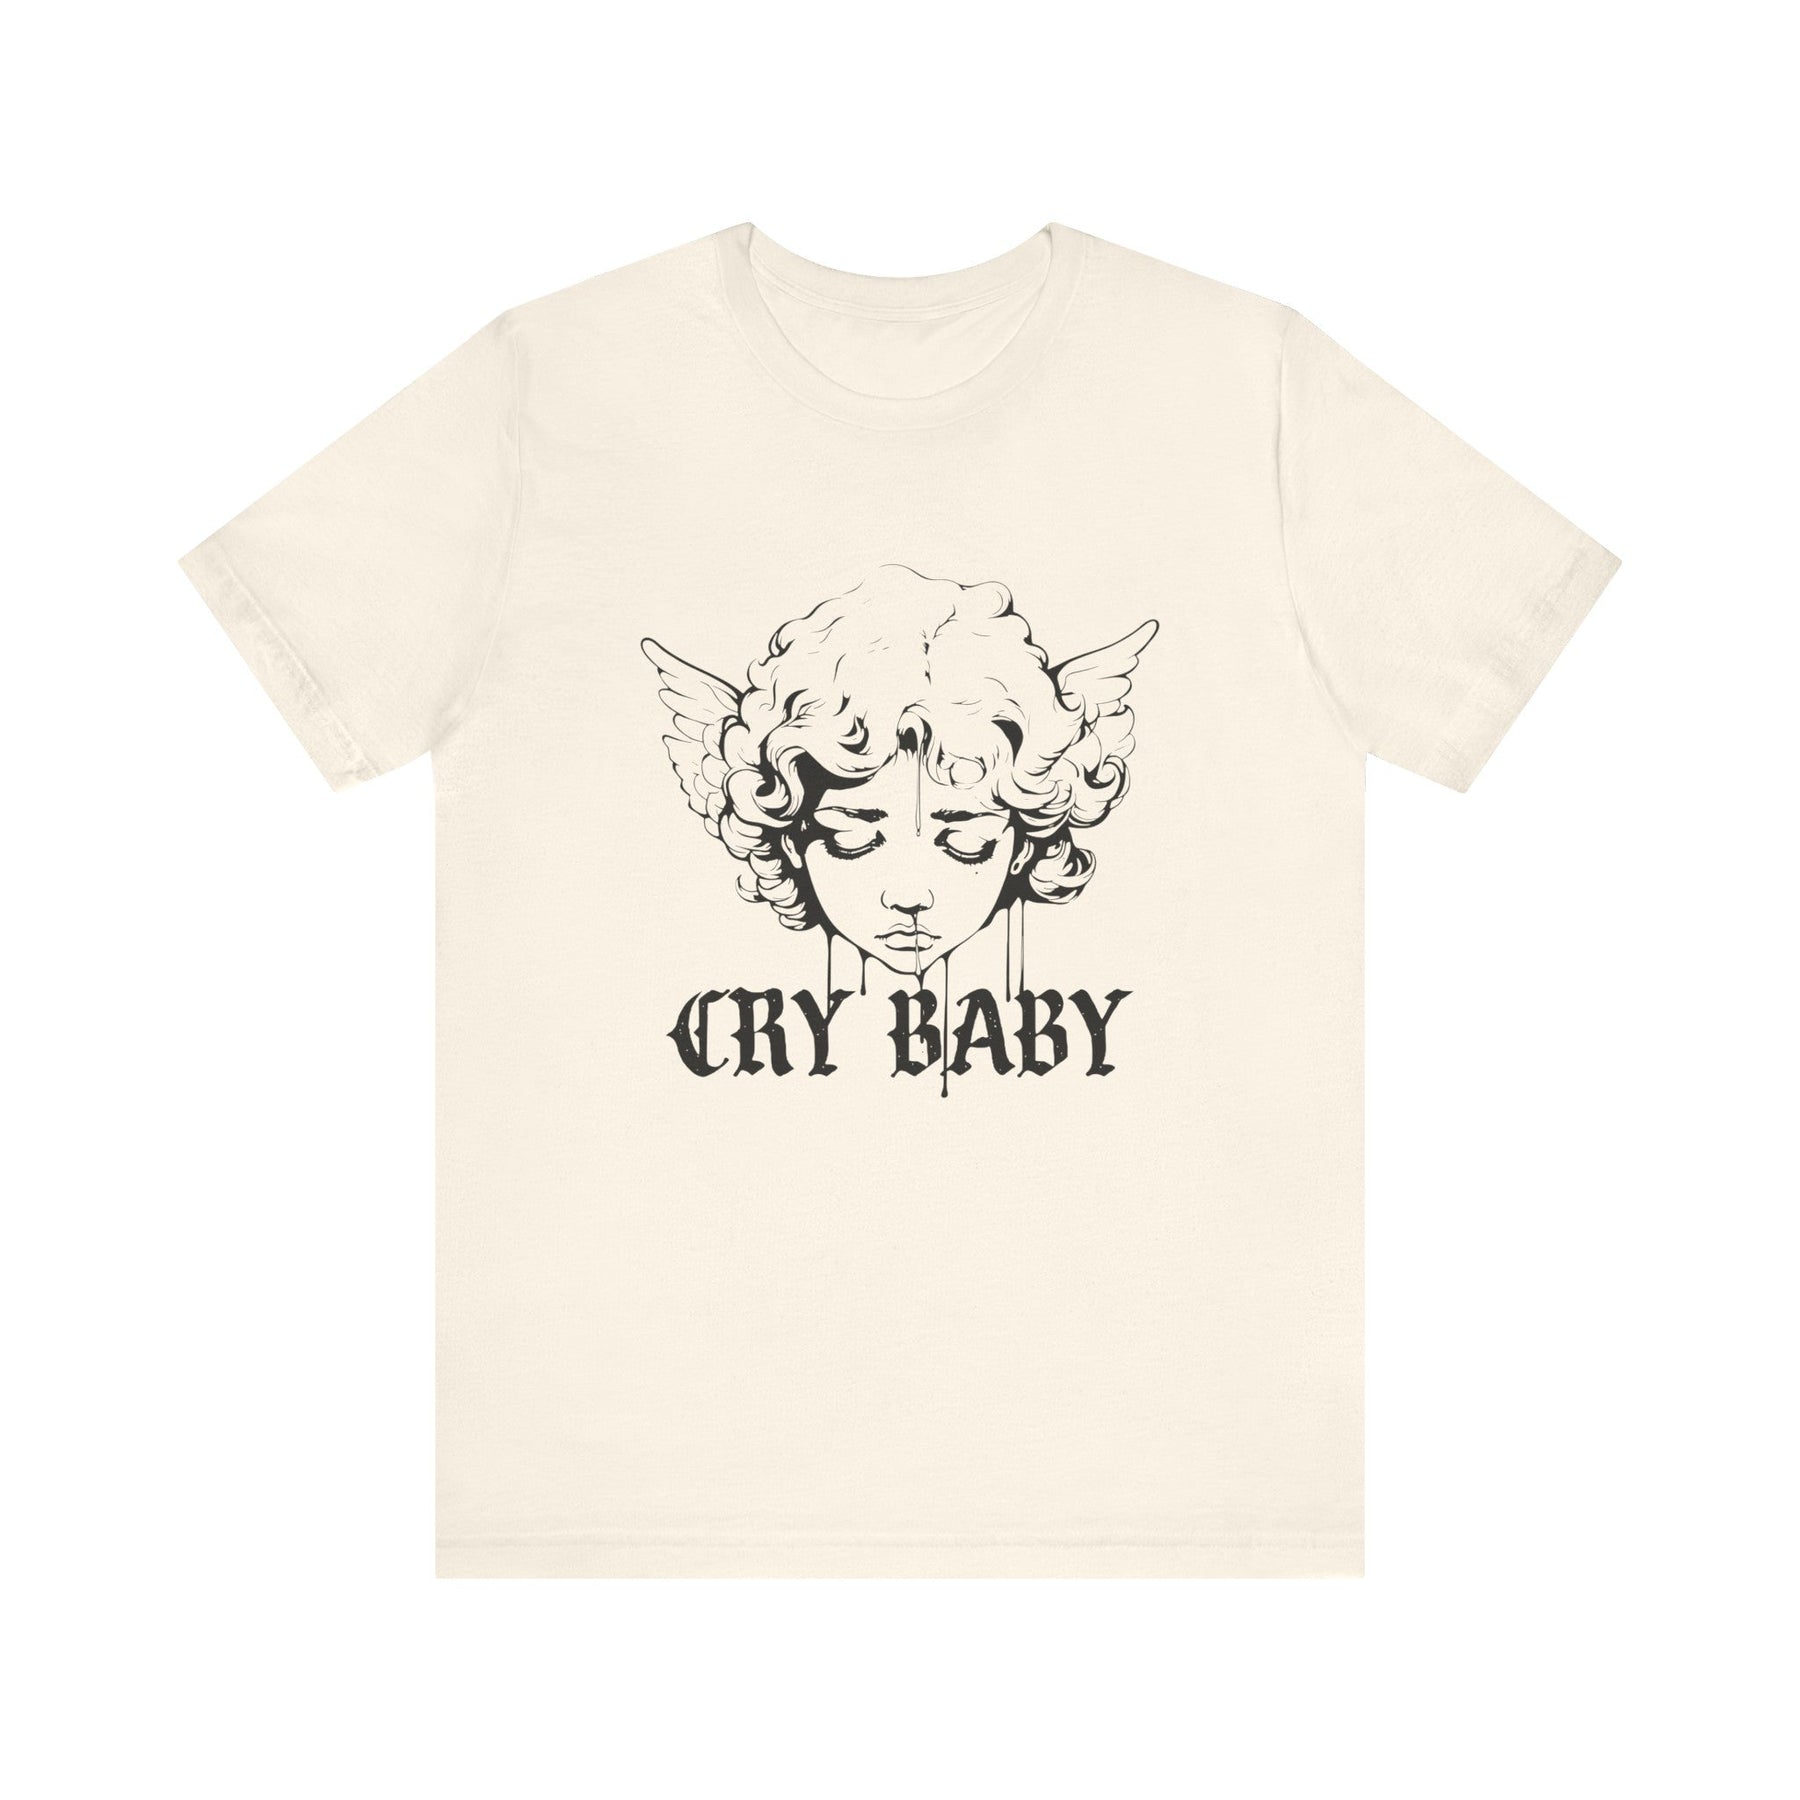 Crybaby Cherub T - Shirt - Goth Cloth Co.T - Shirt28103614241019891402